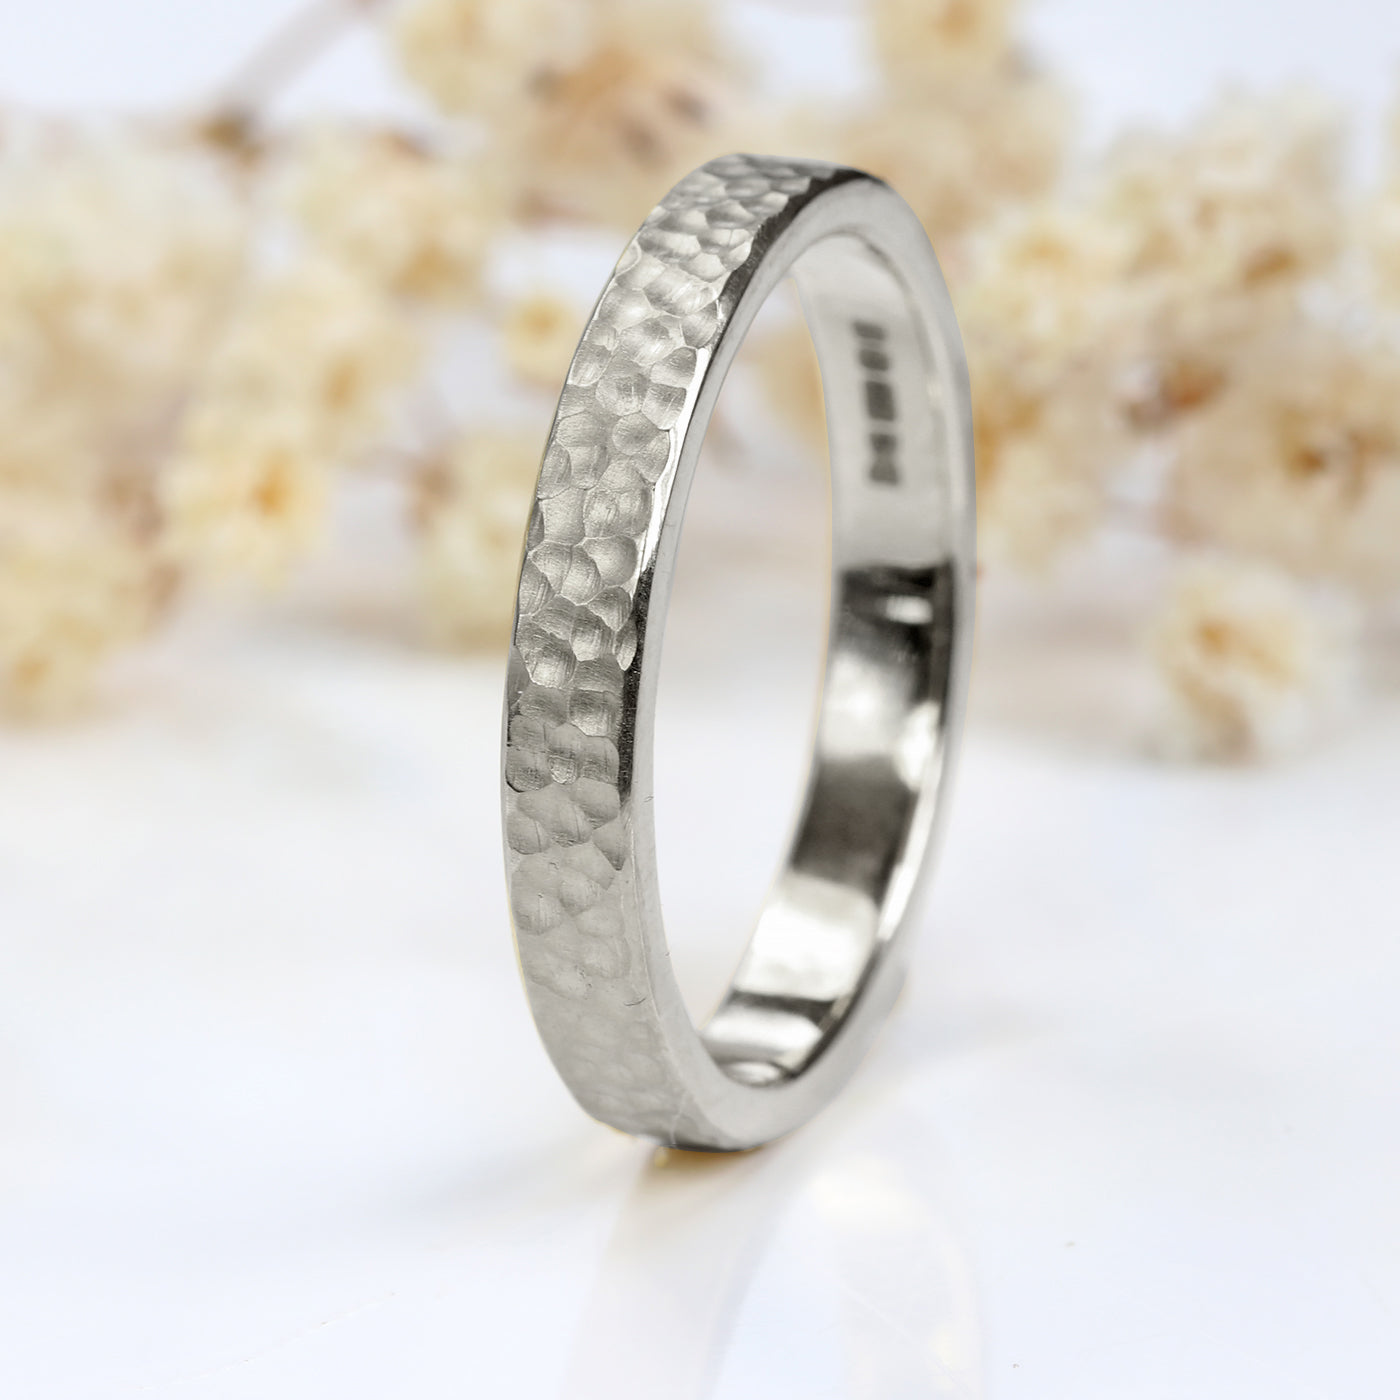 3mm Flat Hammered Platinum Wedding Ring